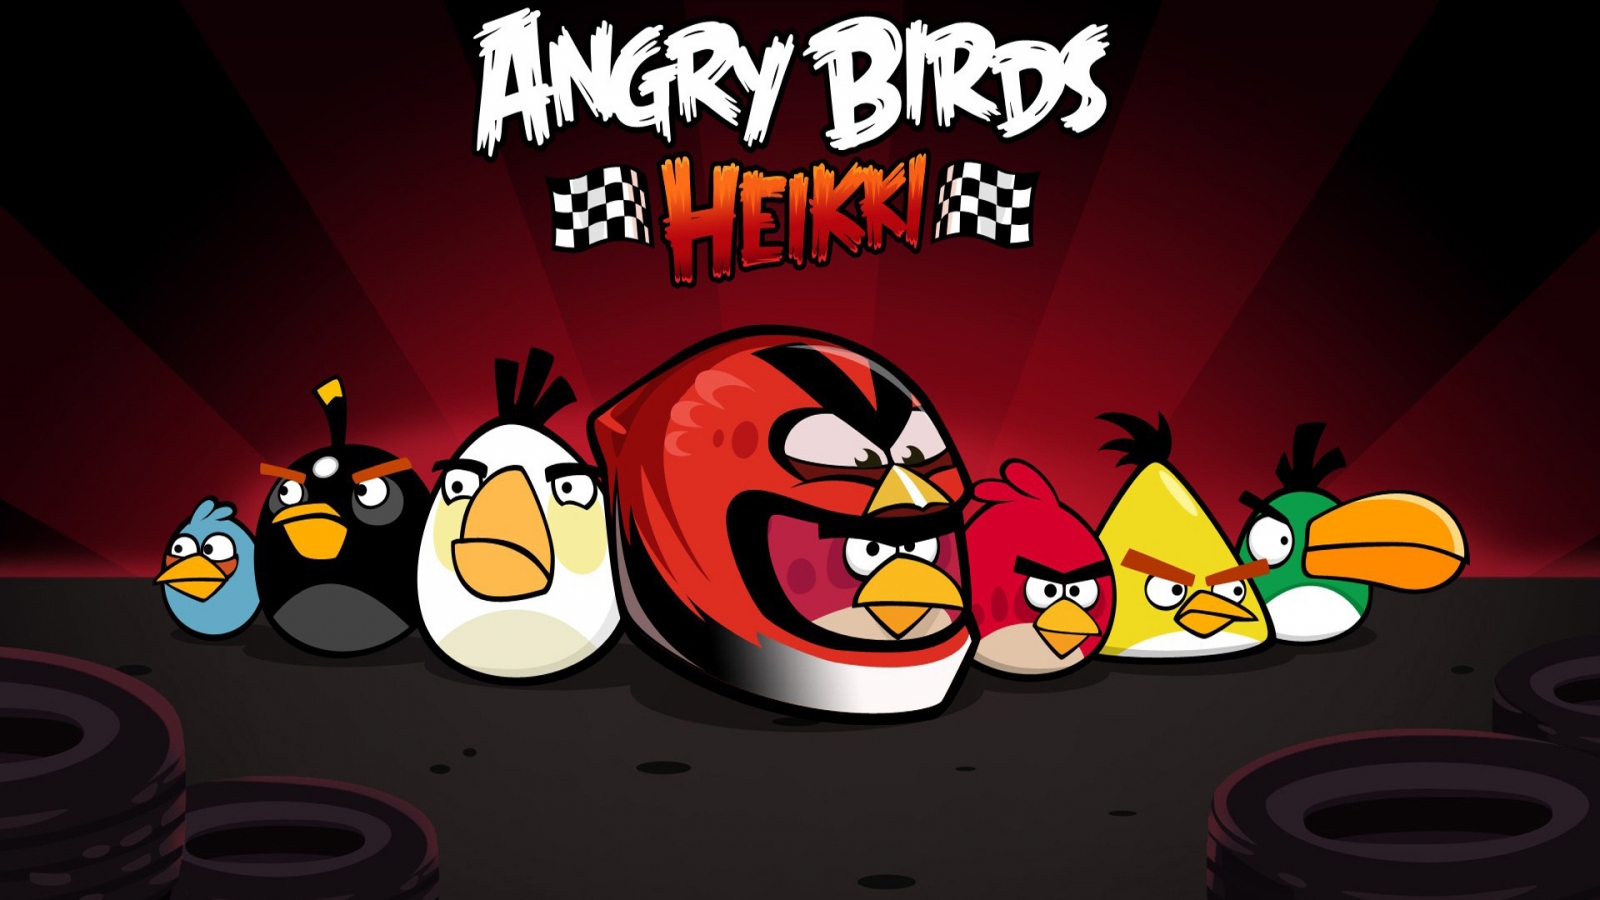 Angry Birds Heikki for 1600 x 900 HDTV resolution